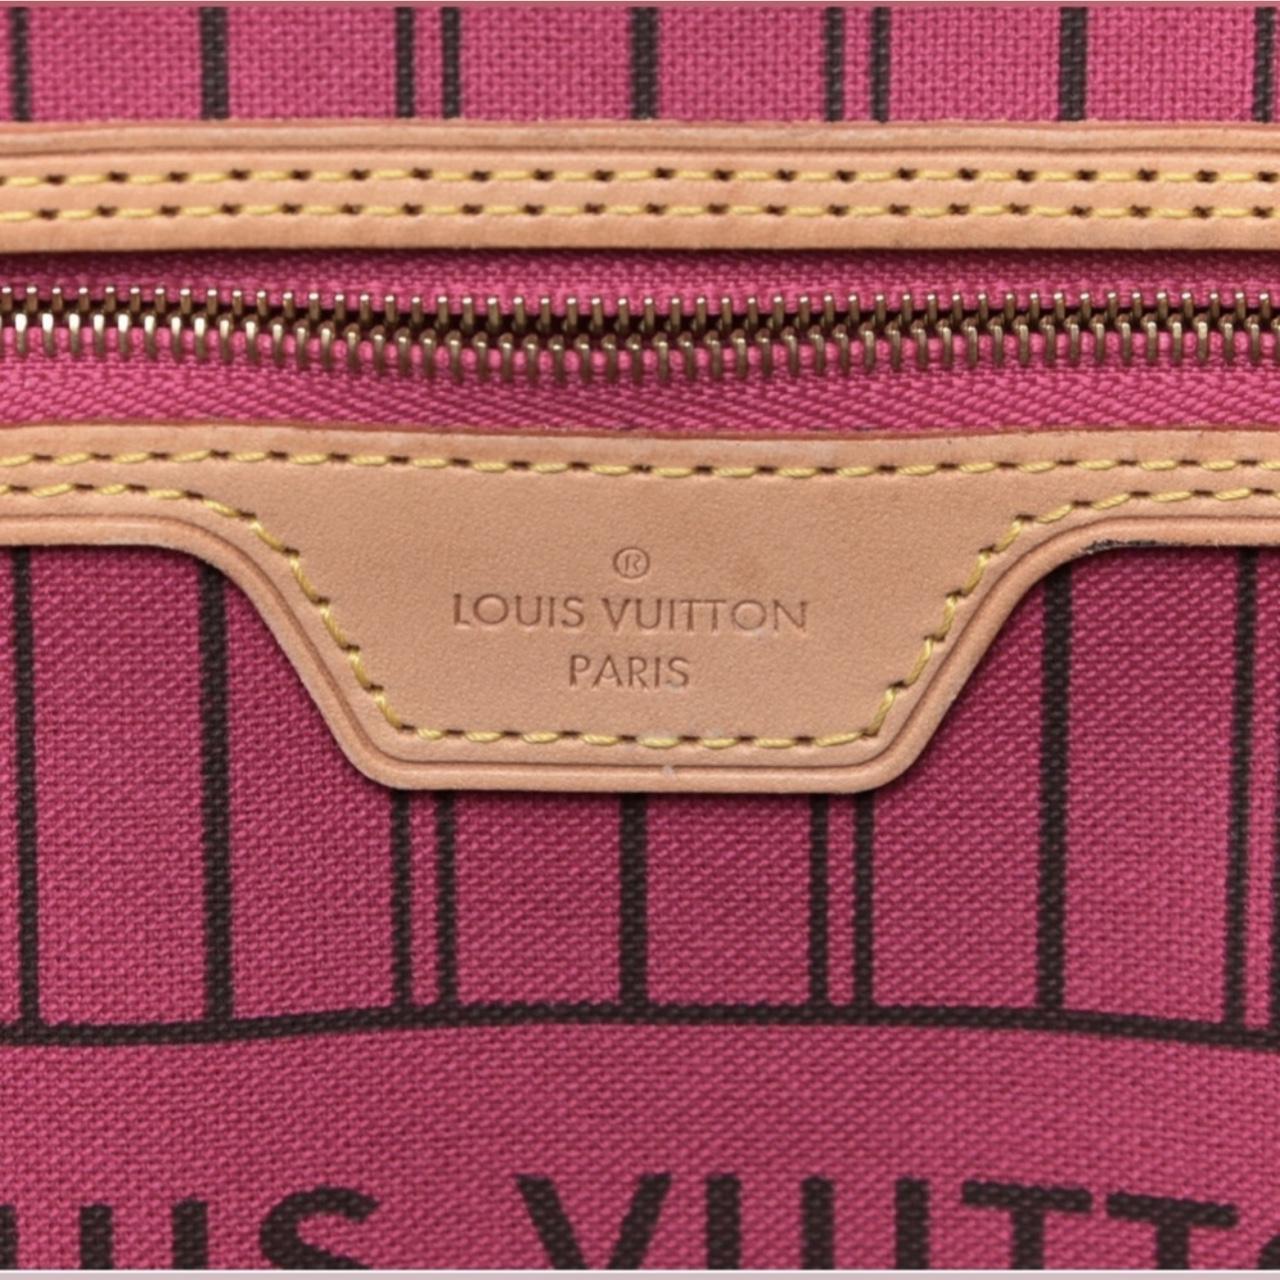 Authentic Louis Vuitton Neverfull MM. ROSE interior - Depop